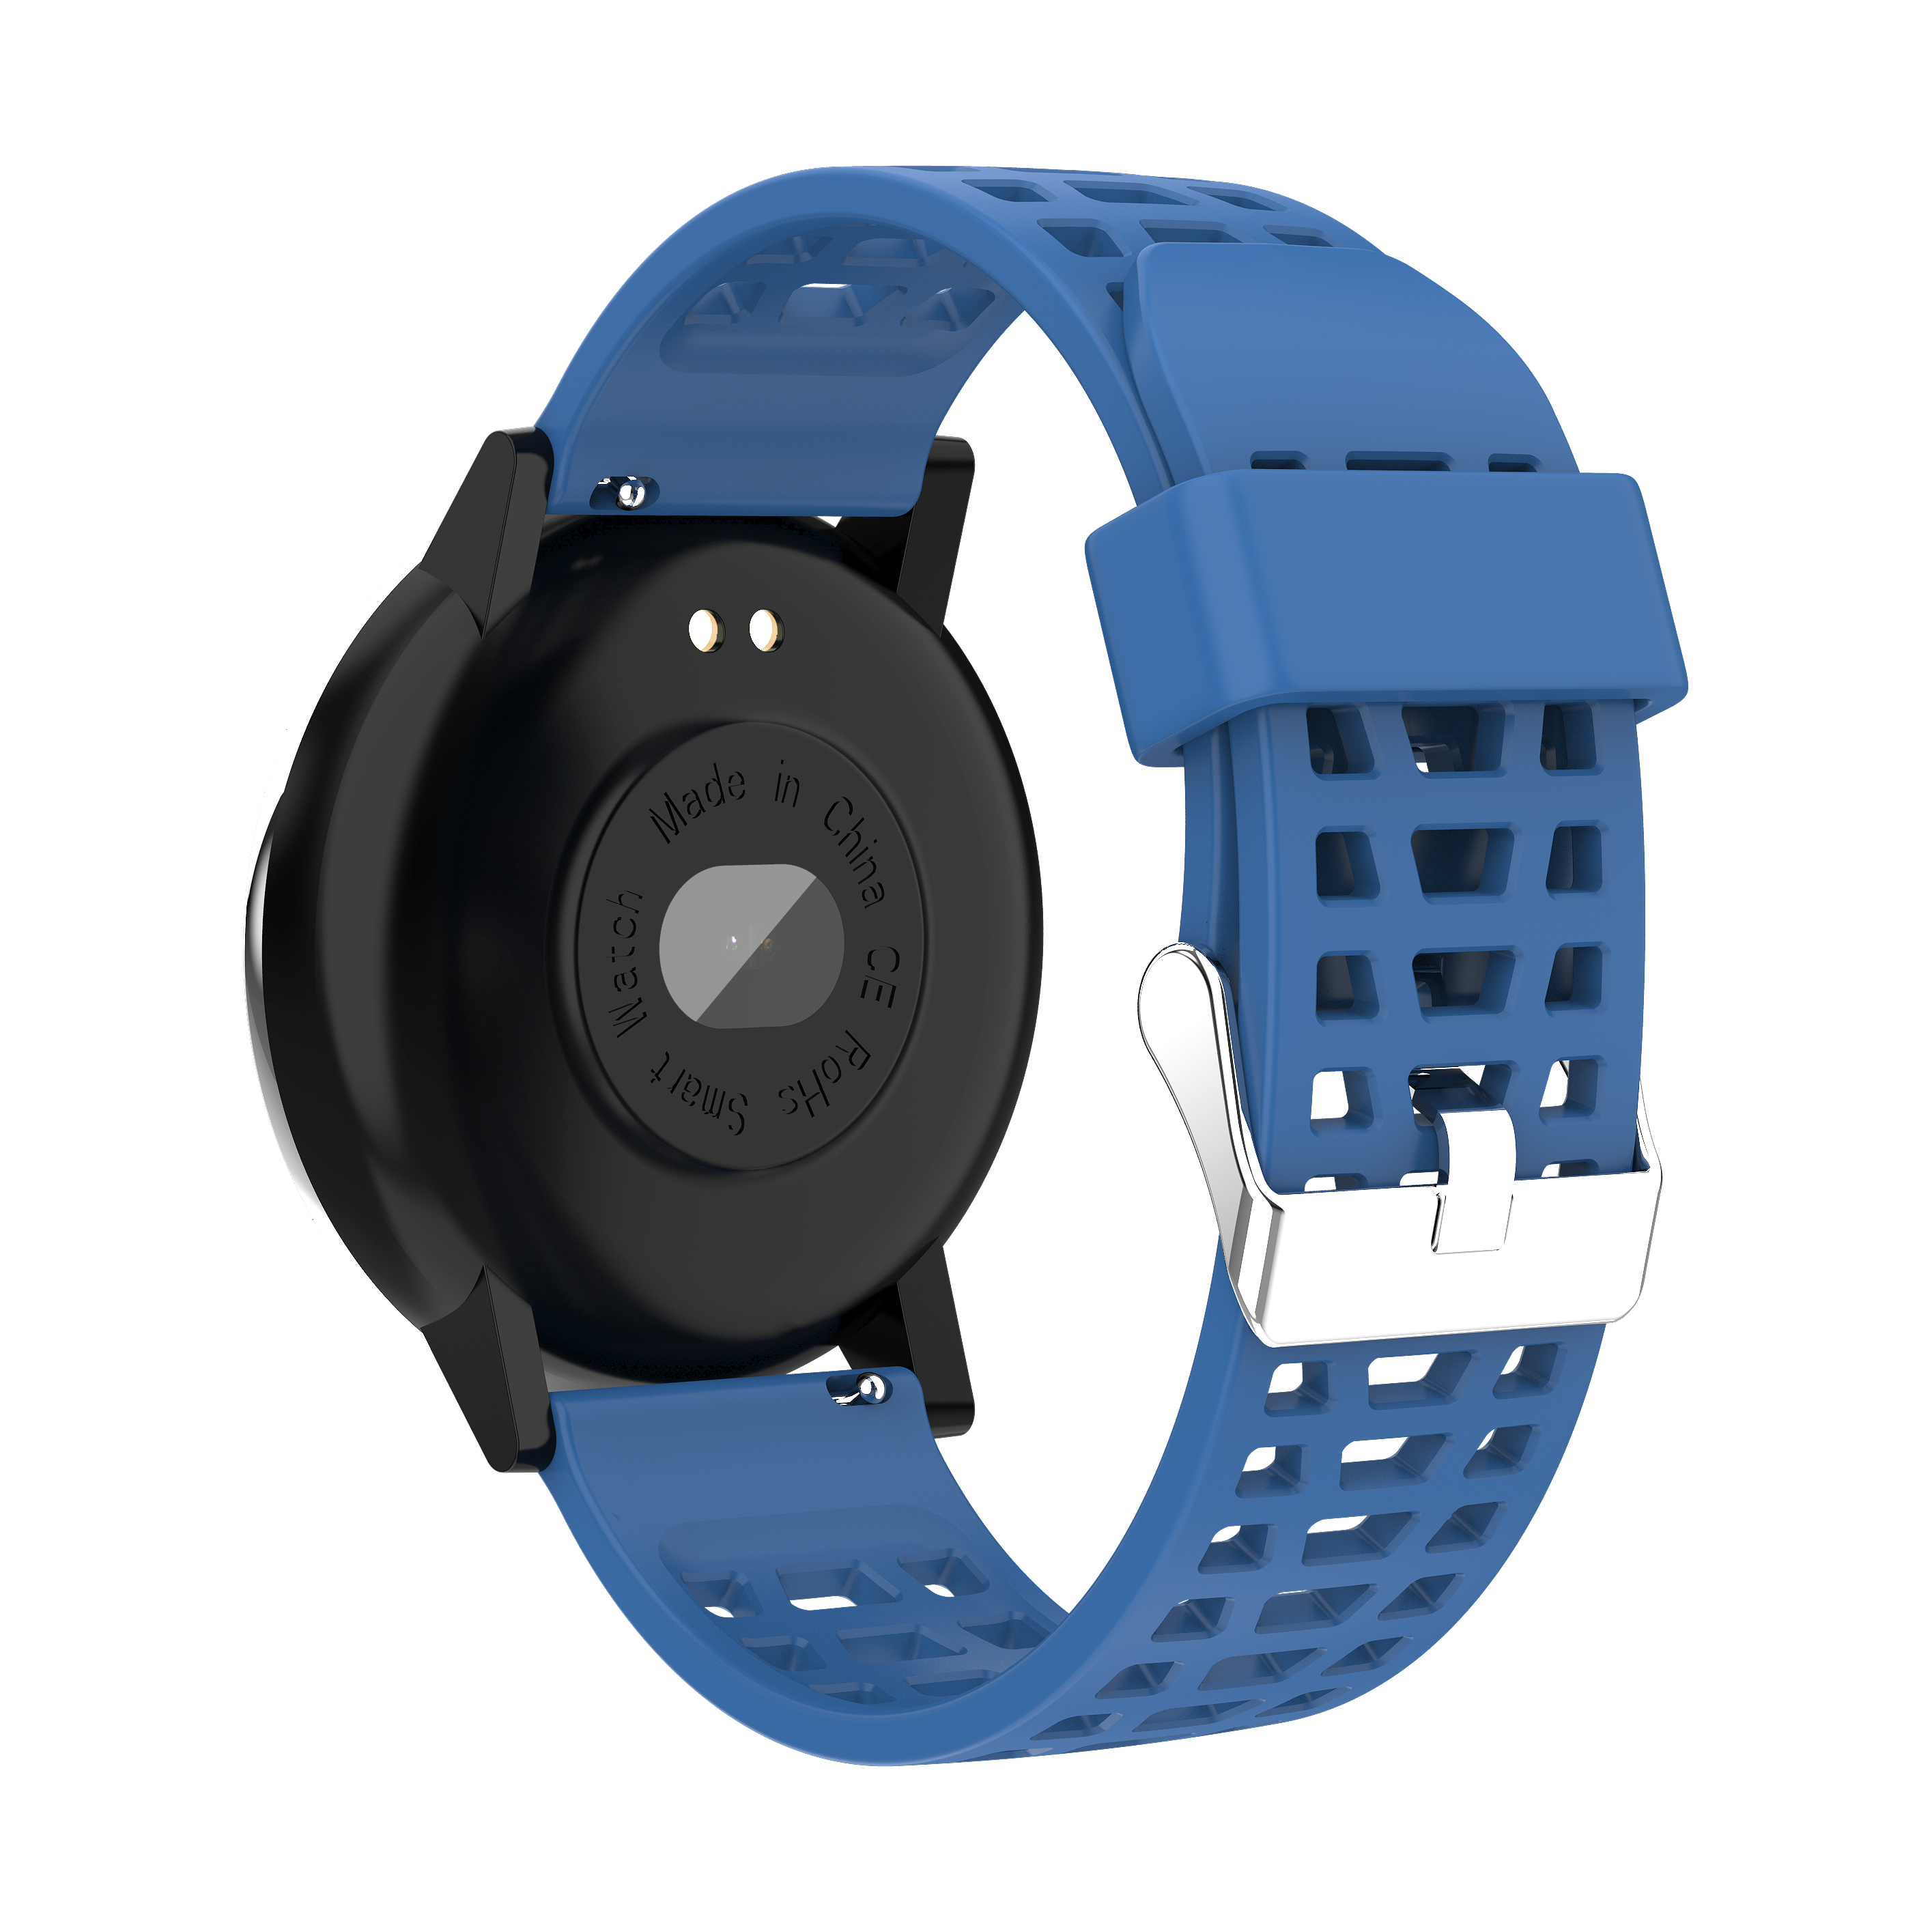 IP67 Waterproof Full Touch Precise Heart Rate SpO2 Monitoring Rohs Smart Bracelet G30